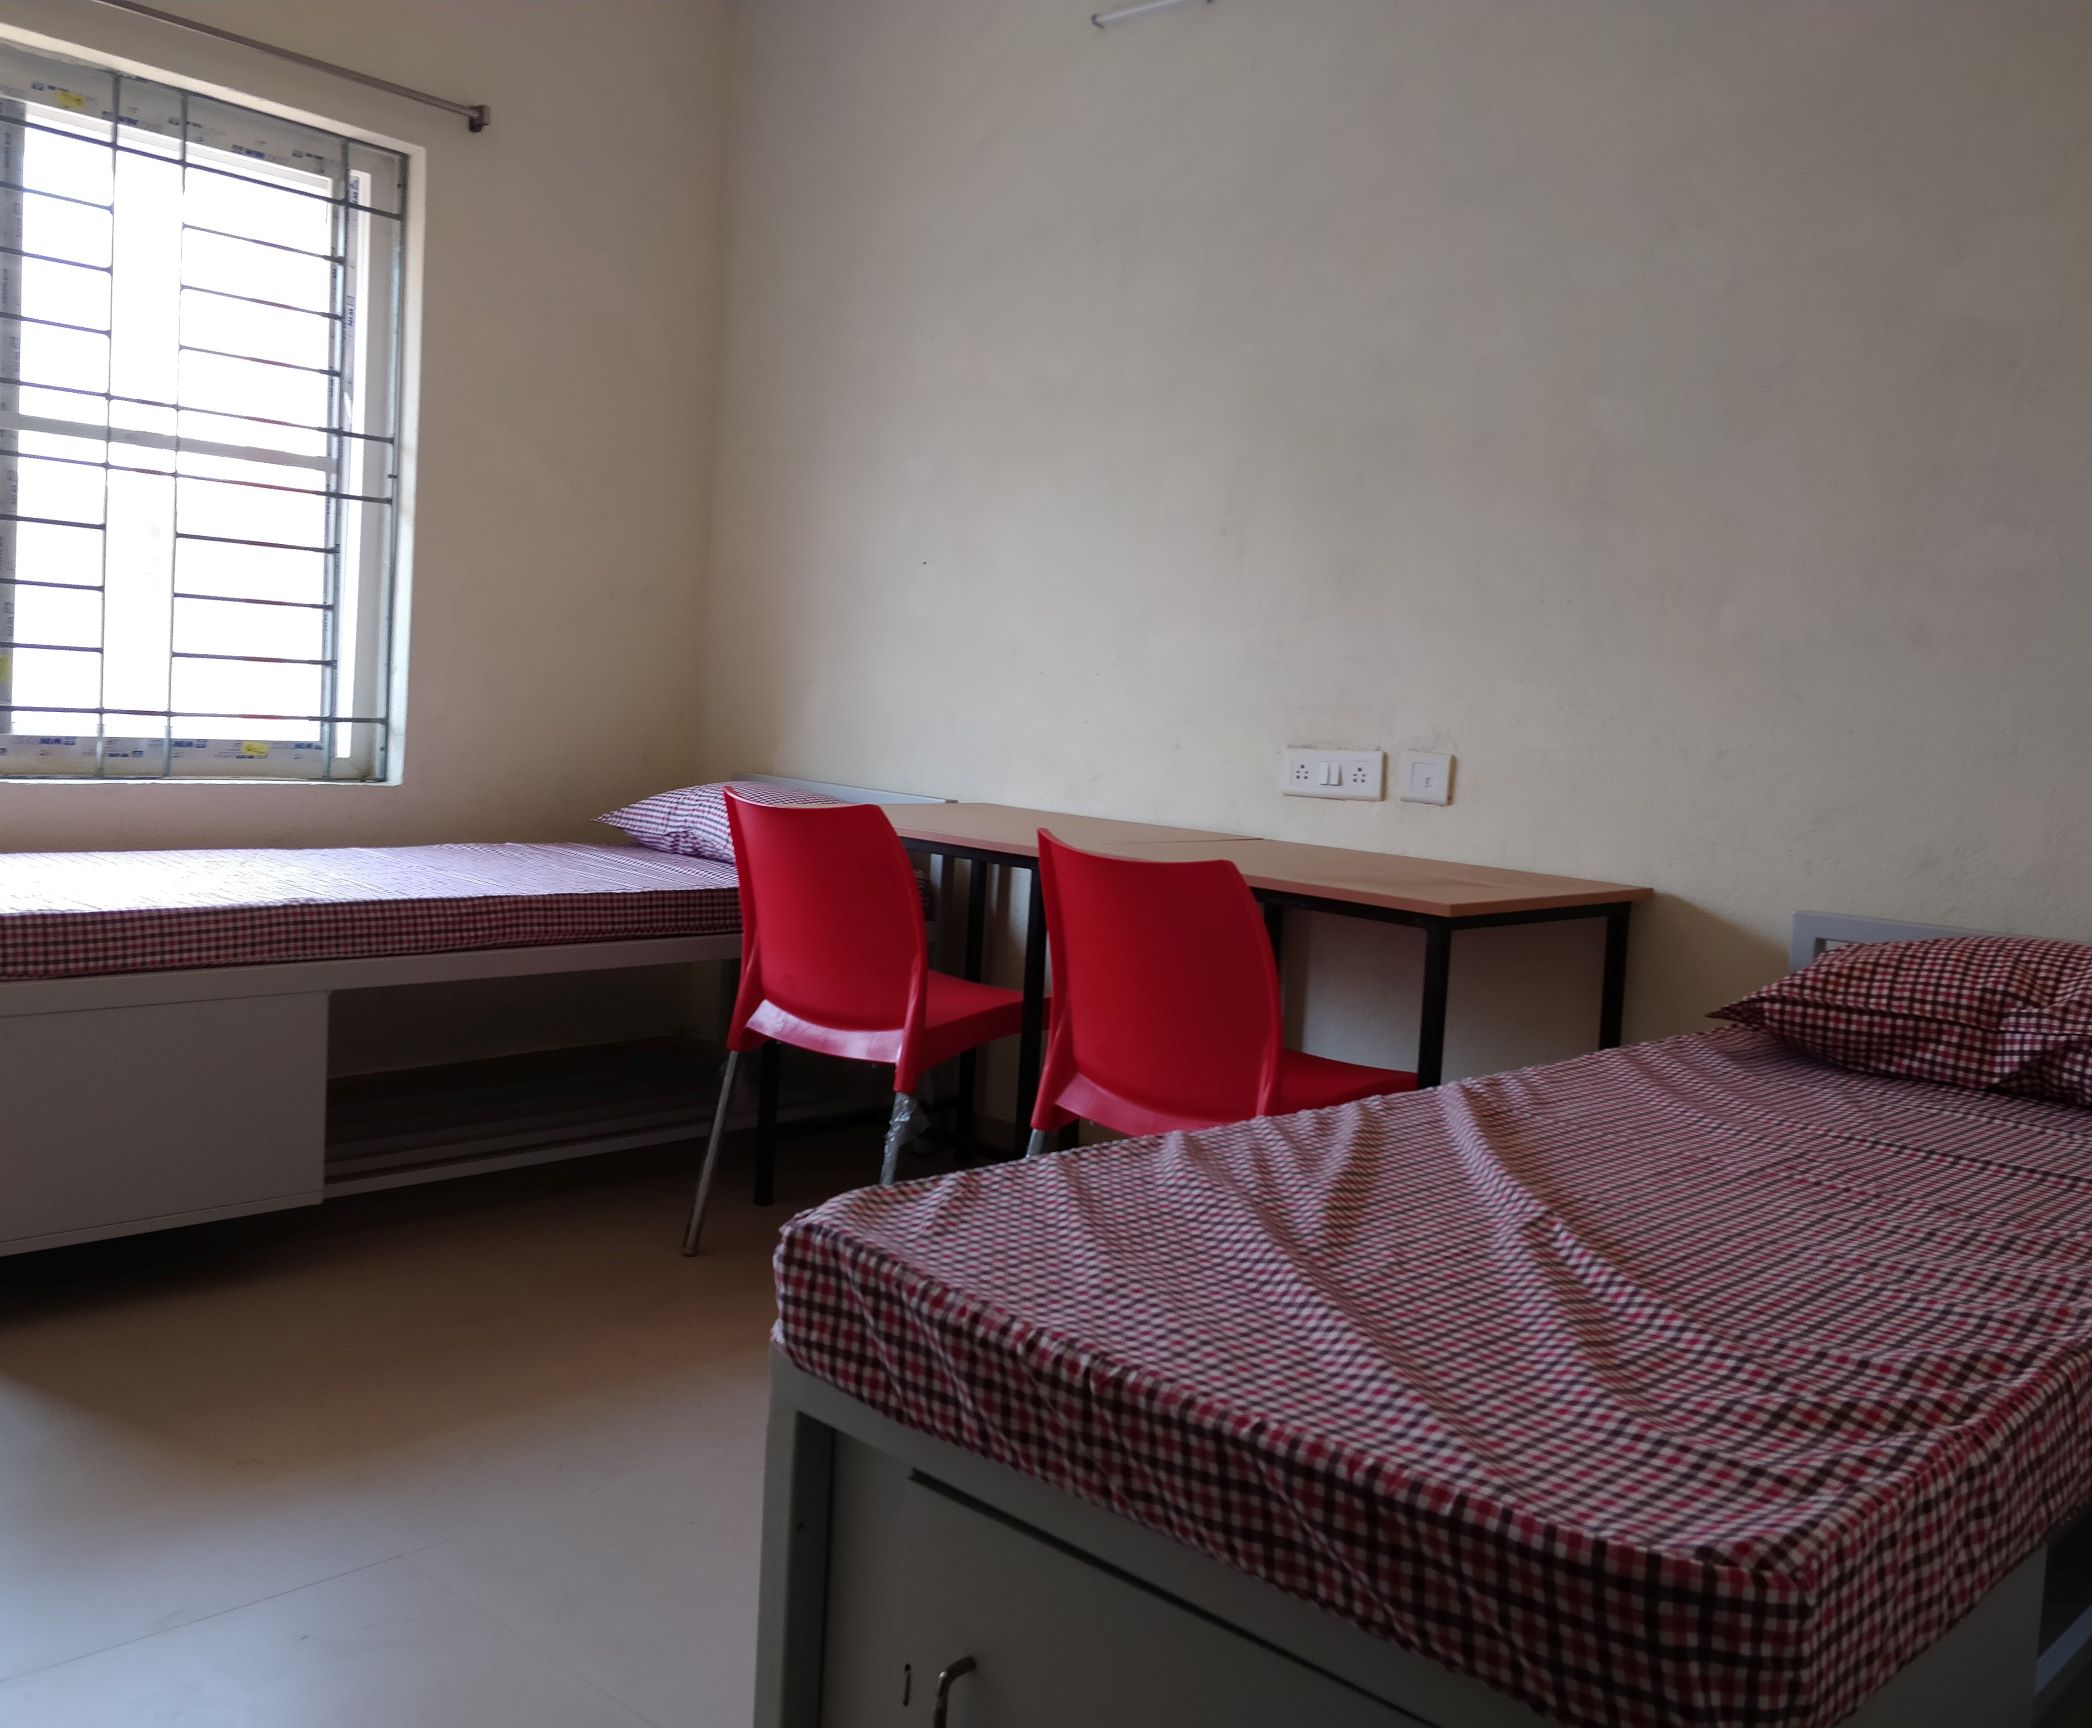 Hostel rooms